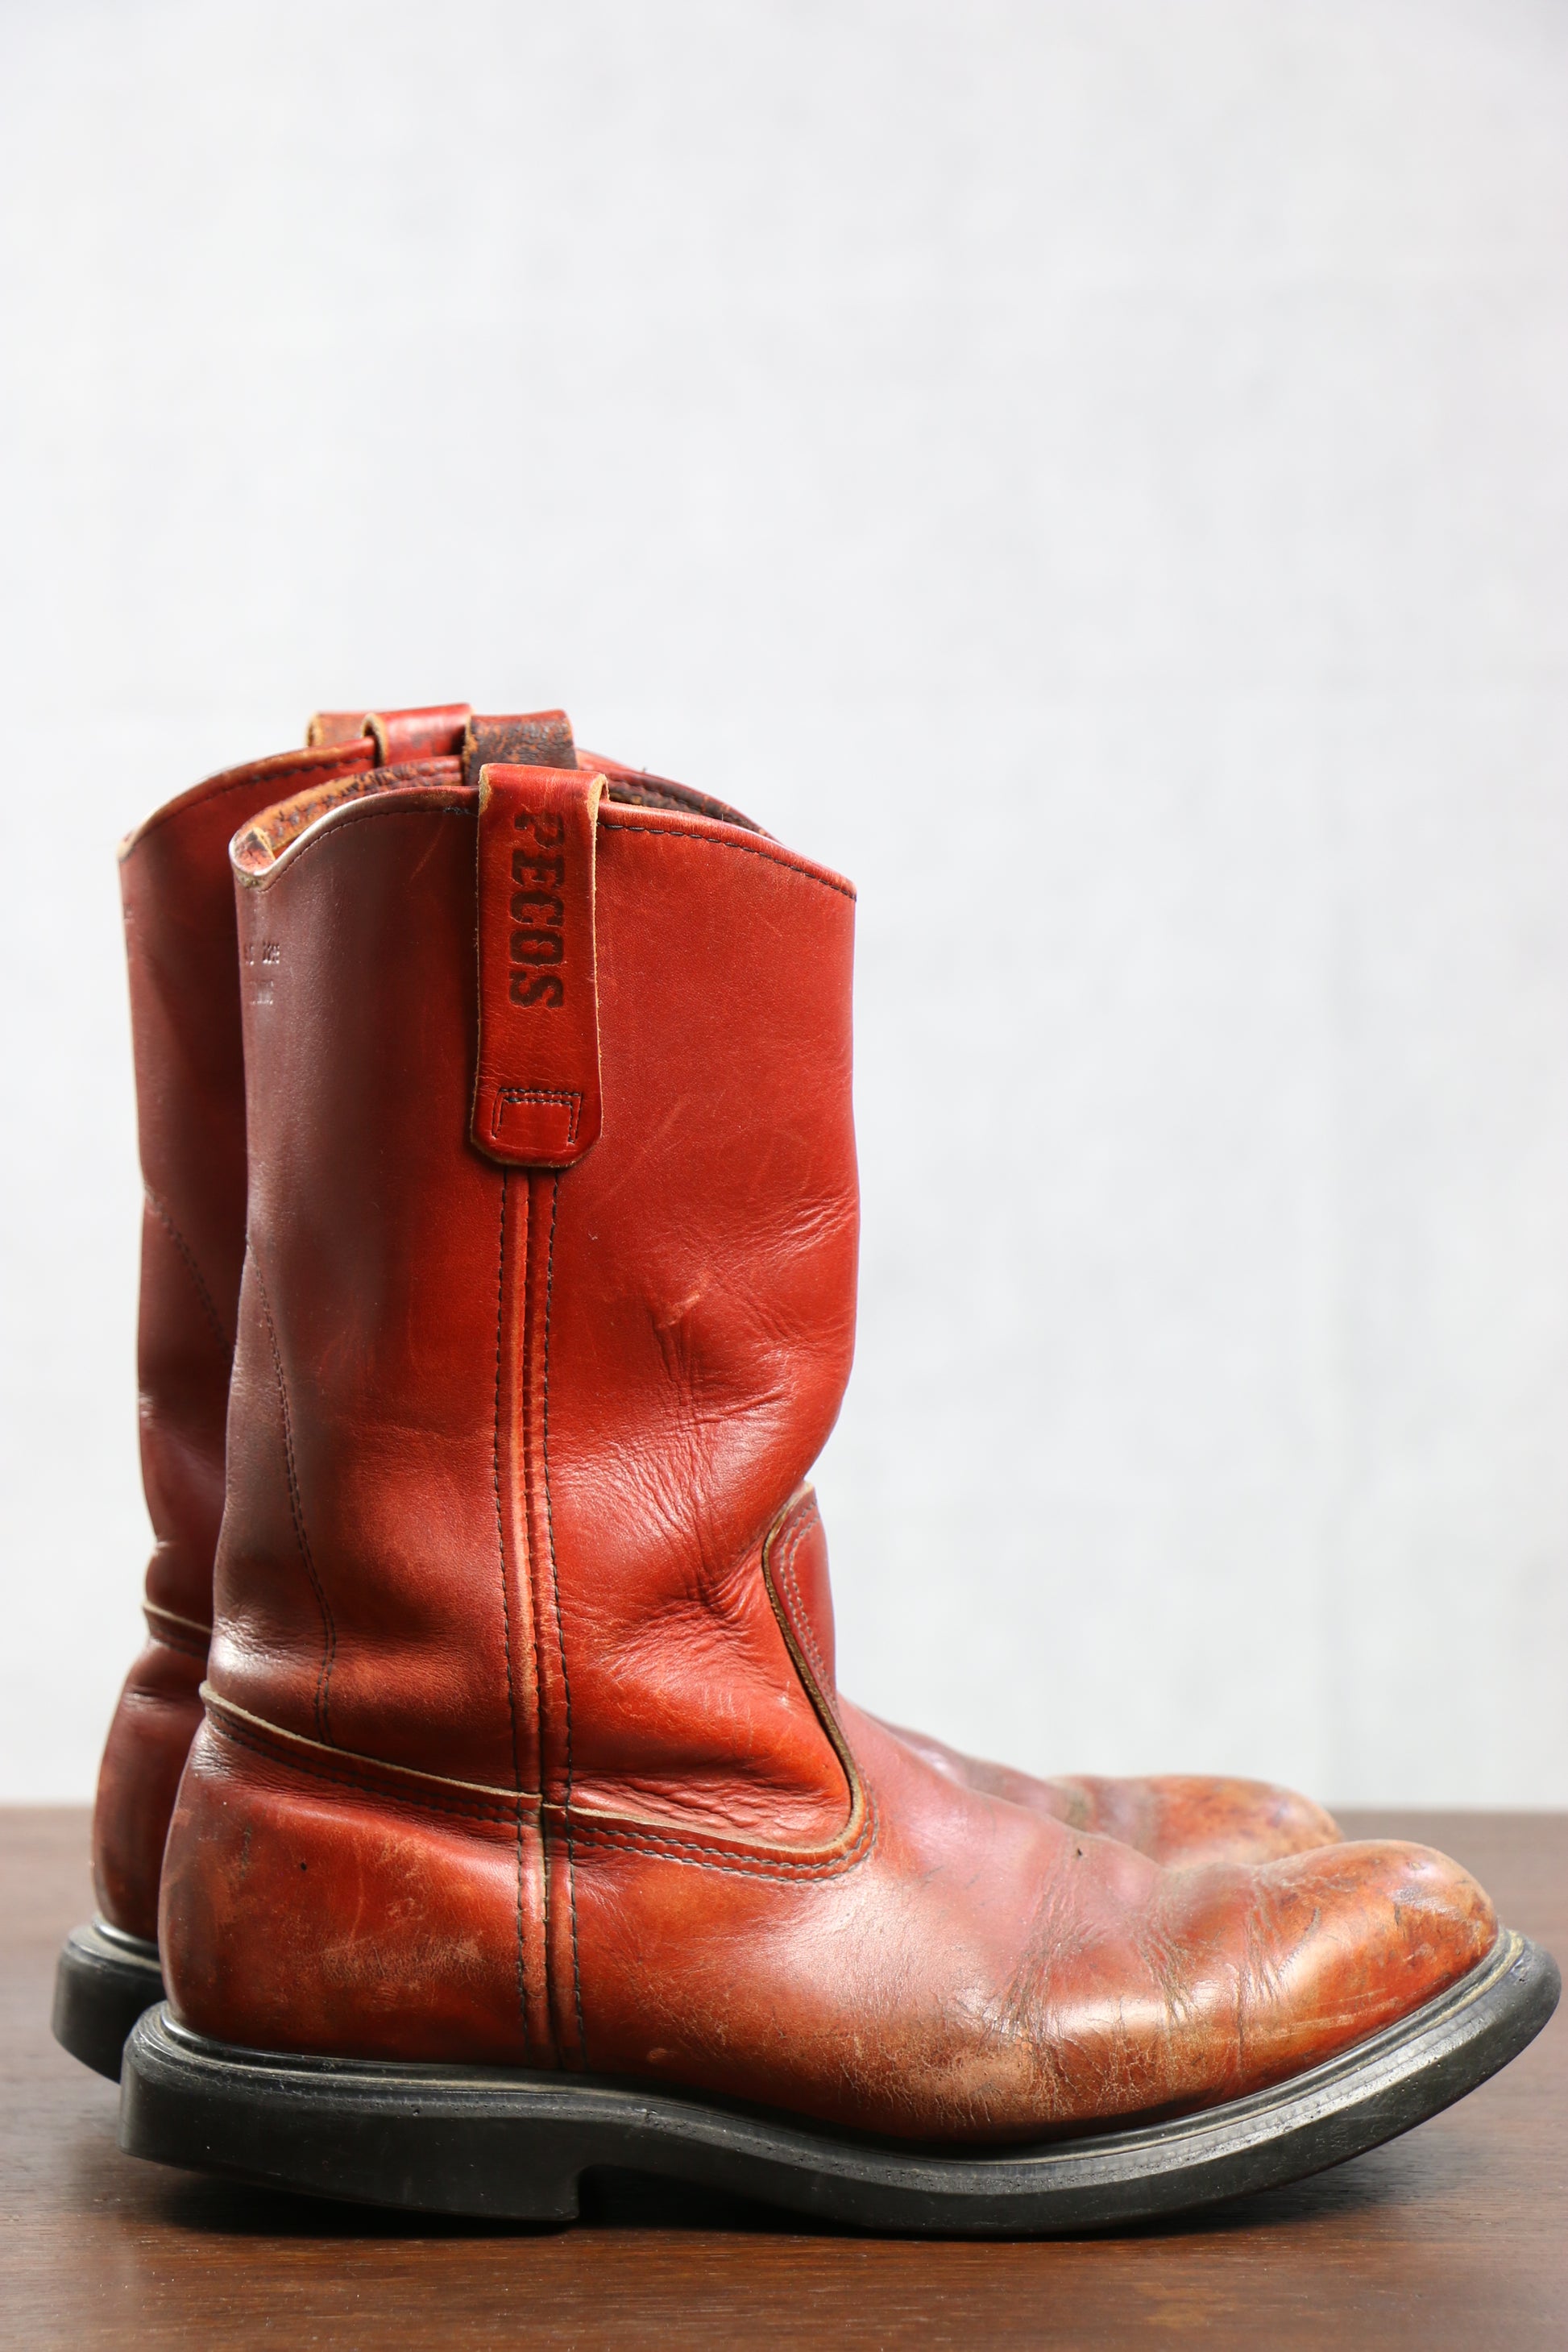 Red Wing Pecos Boots, clochard92.com